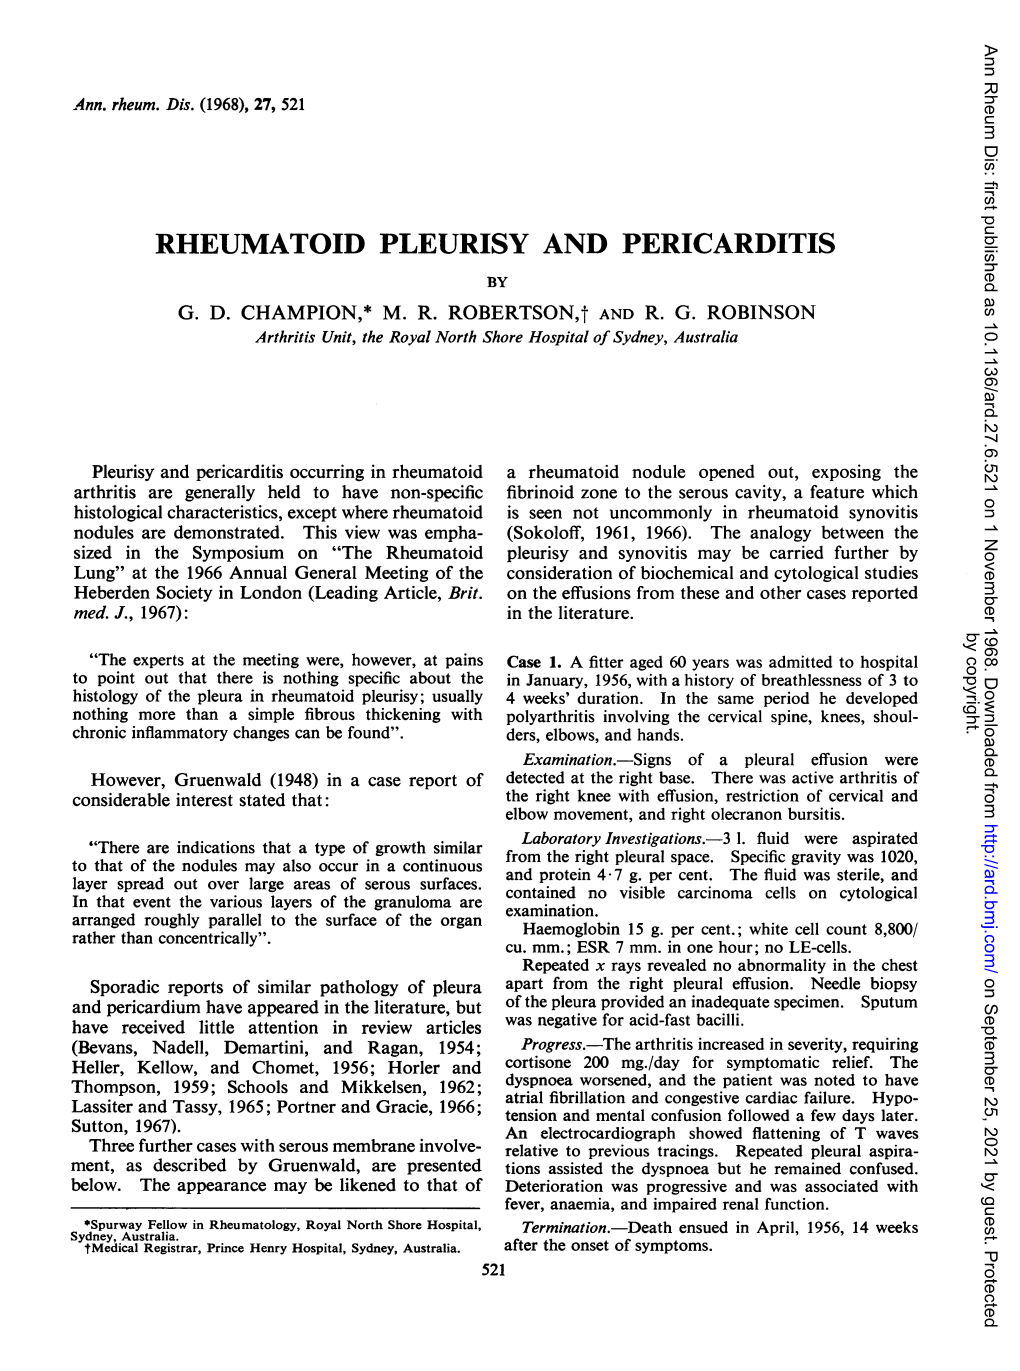 Rheumatoid Pleurisy and Pericarditis by G